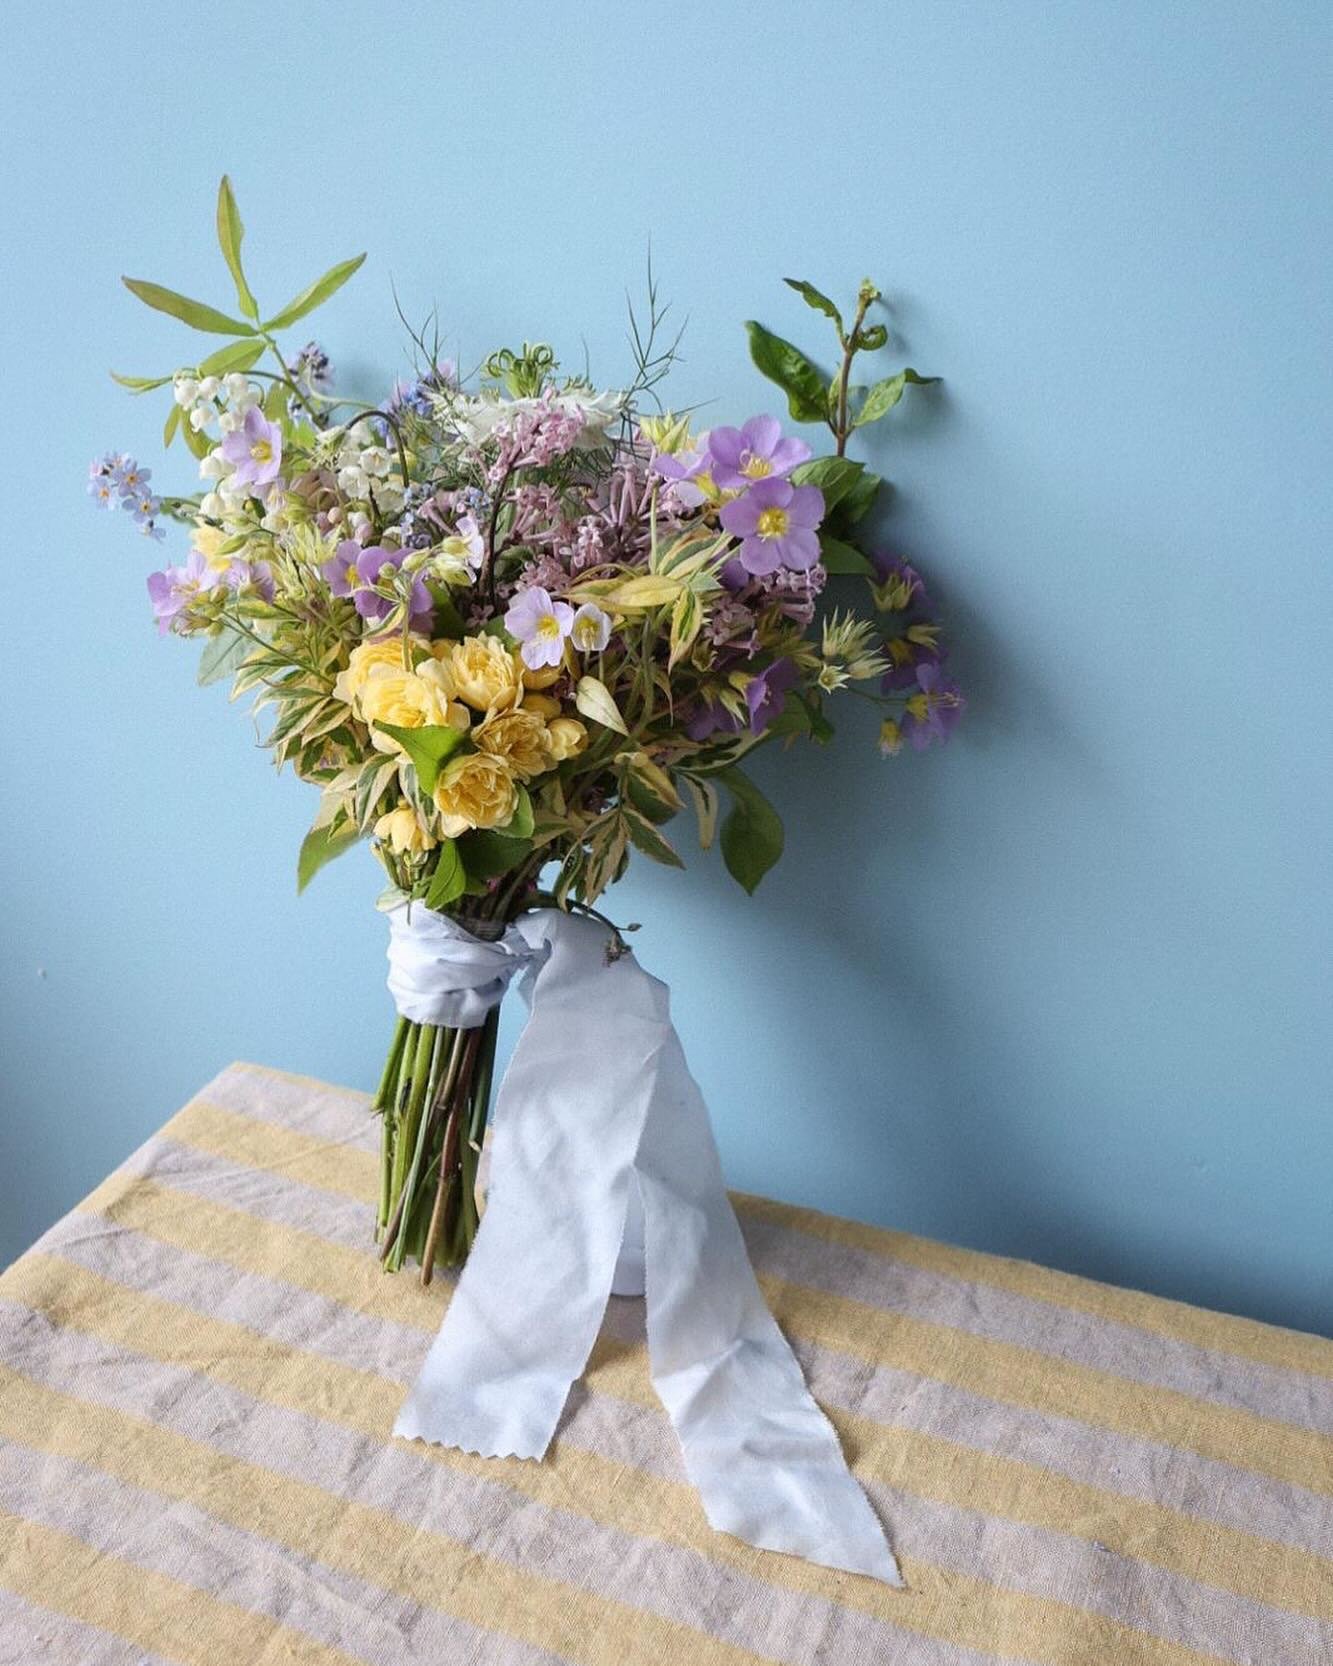 teeny tiny bridal bouquet for lovely Karin
.
#weddingflorist #flowersfromadistance #excessivelydivertedbyflowers #birminghamflorist #stirchley #theflowershopkeepers